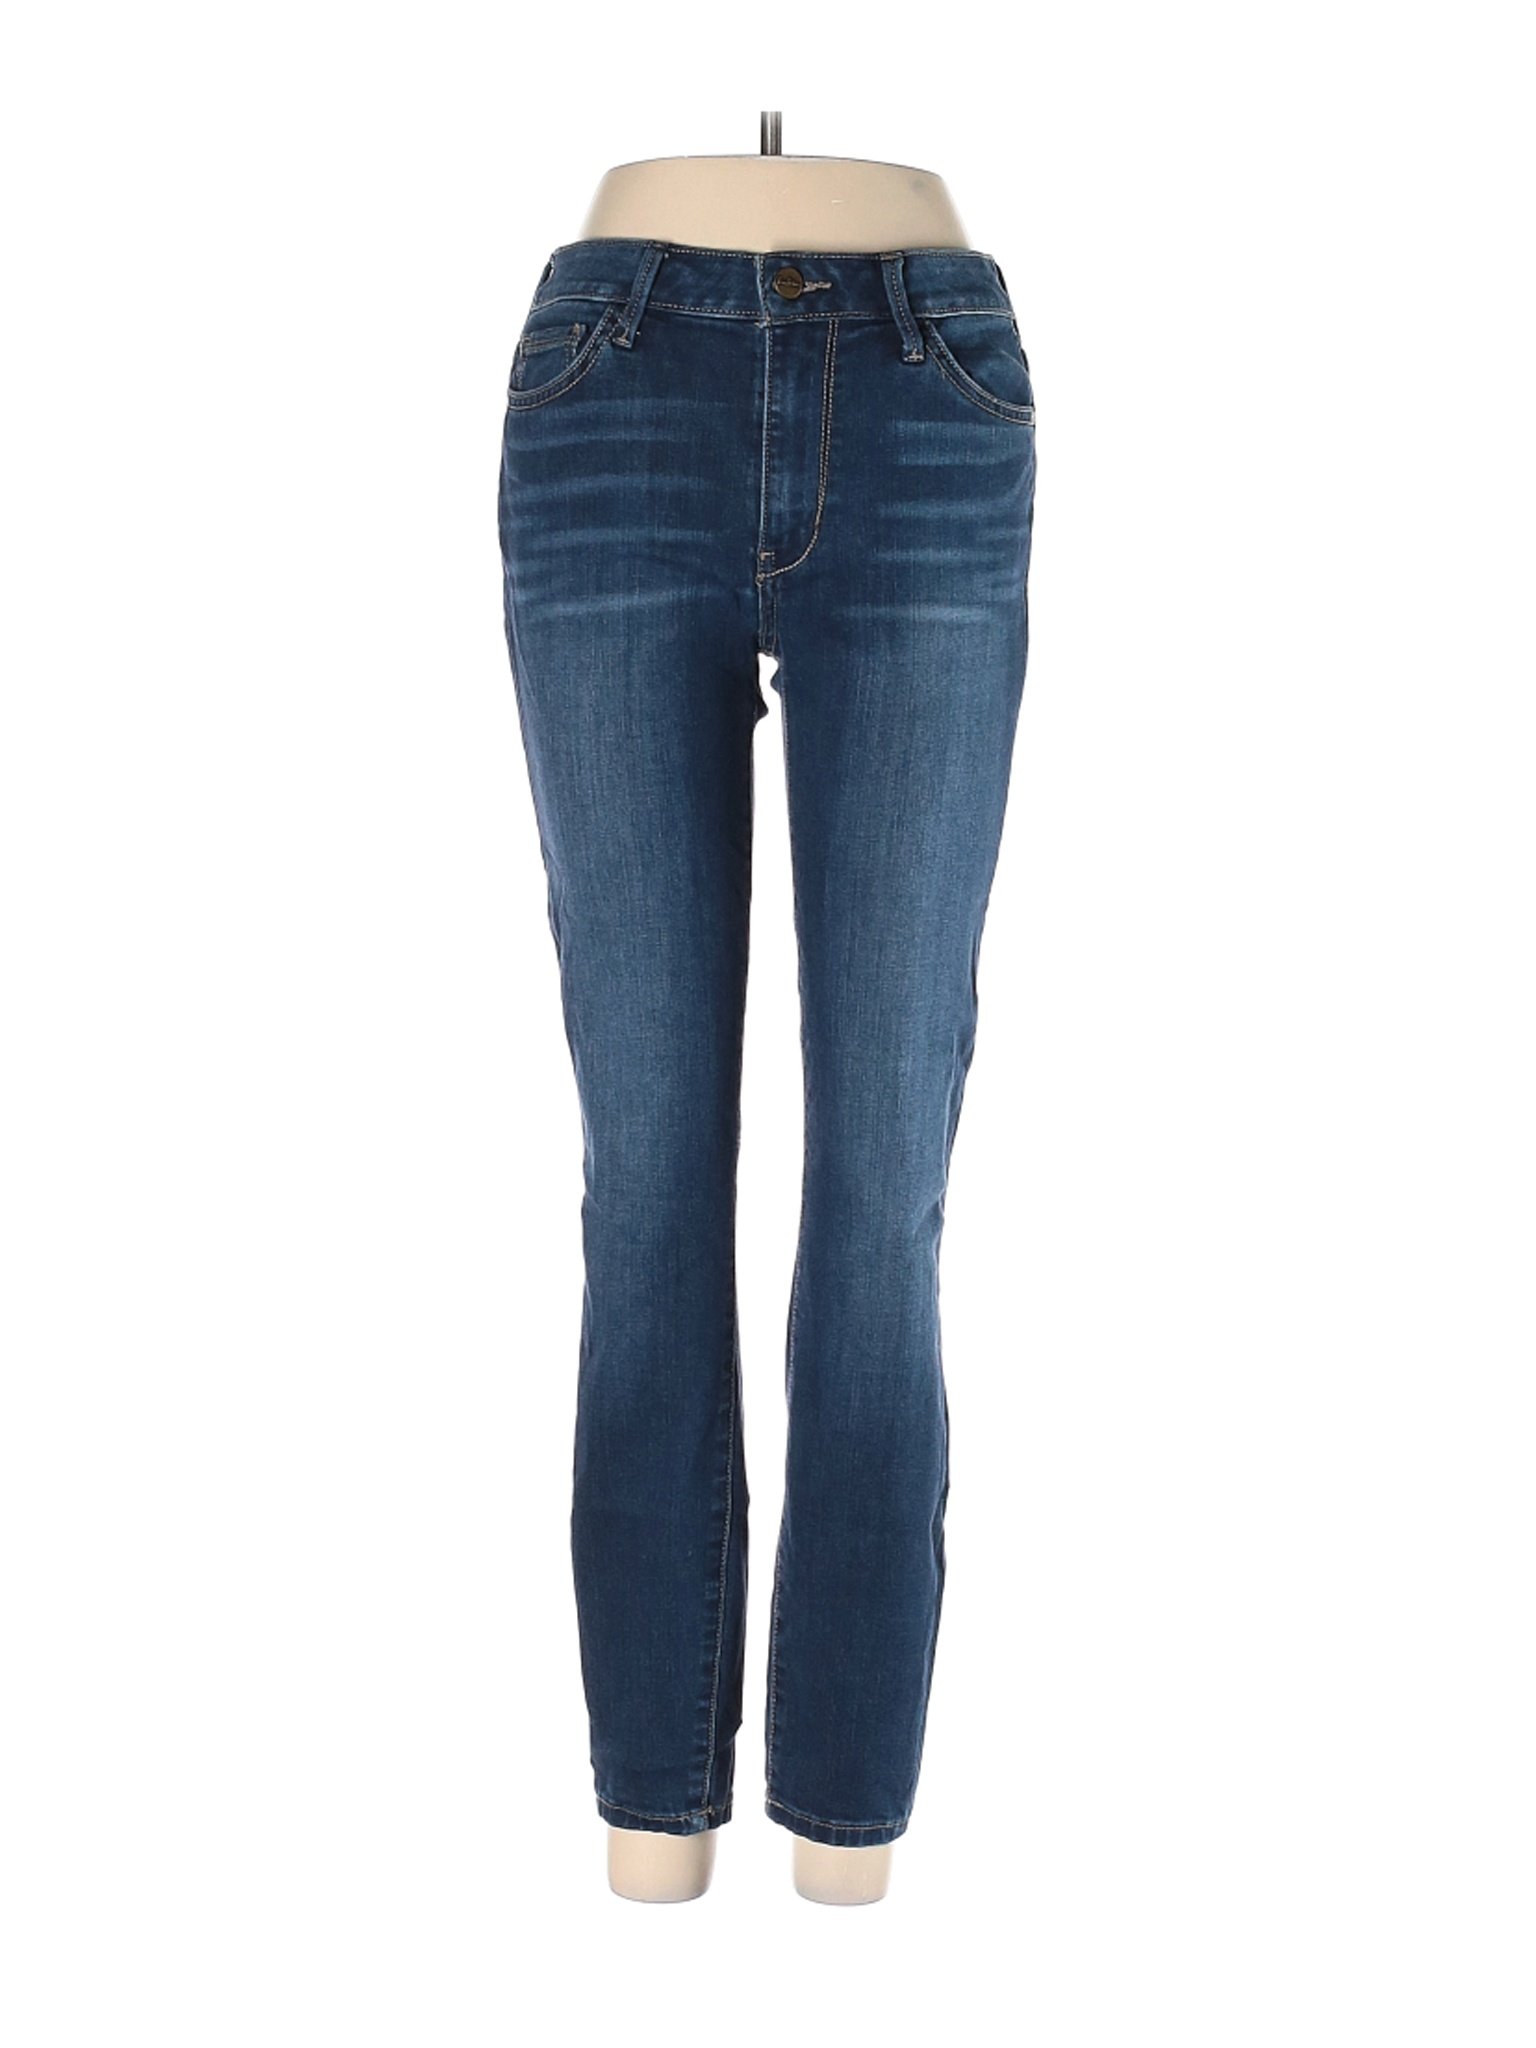 Sam Edelman Women Blue Jeans 26W | eBay